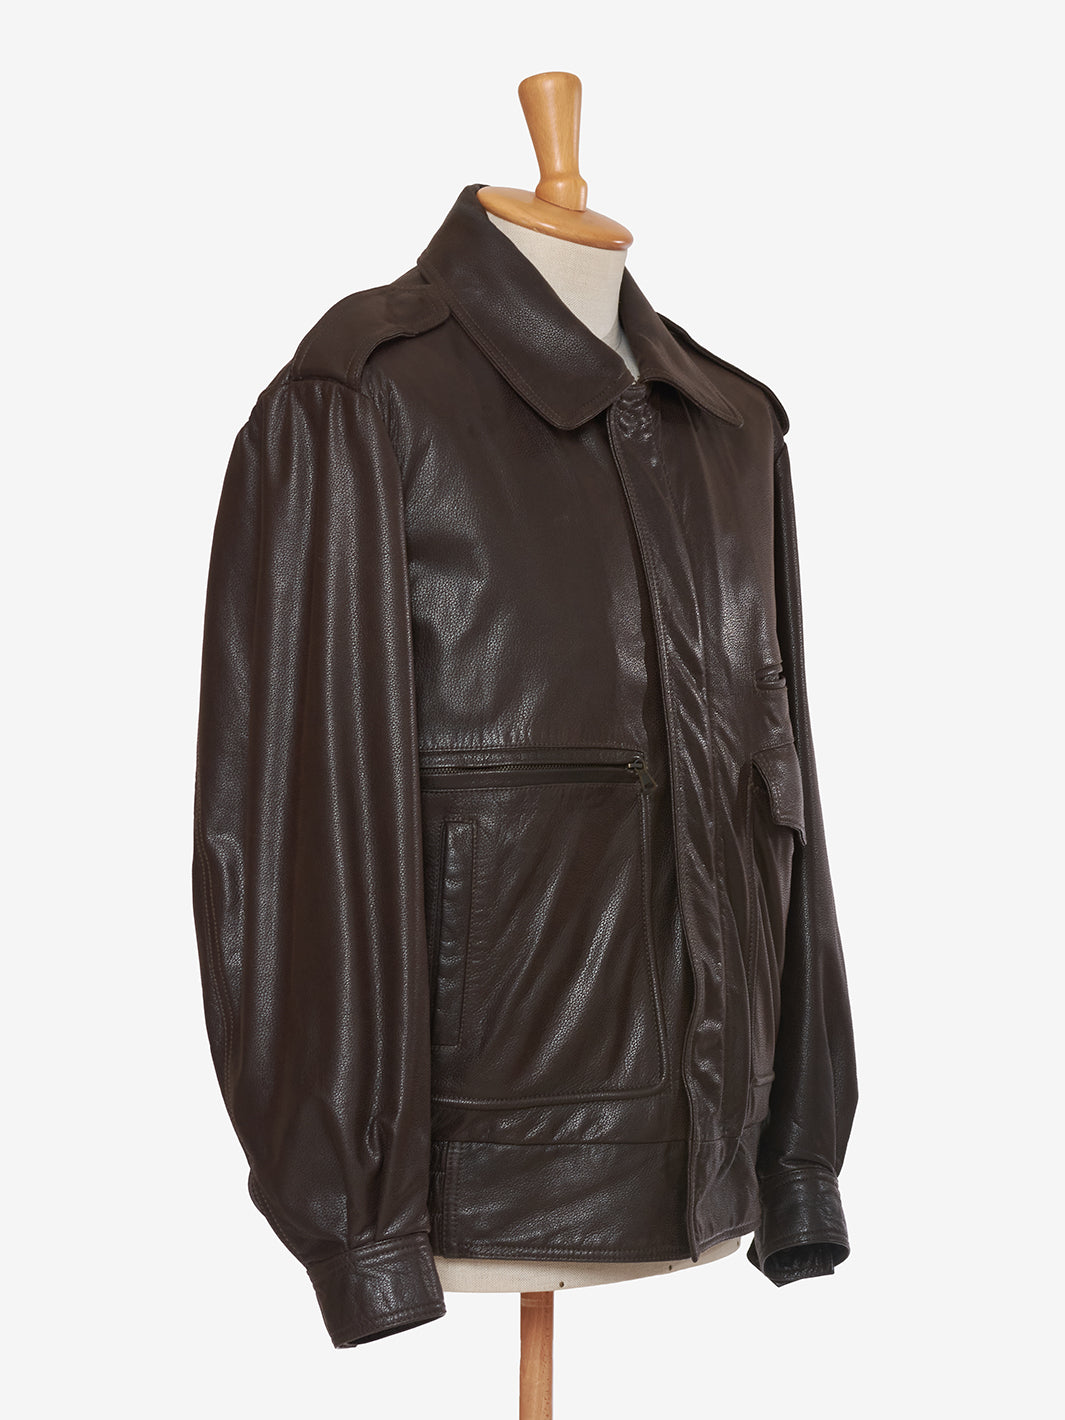 Vintage leather aviator pattern jacket